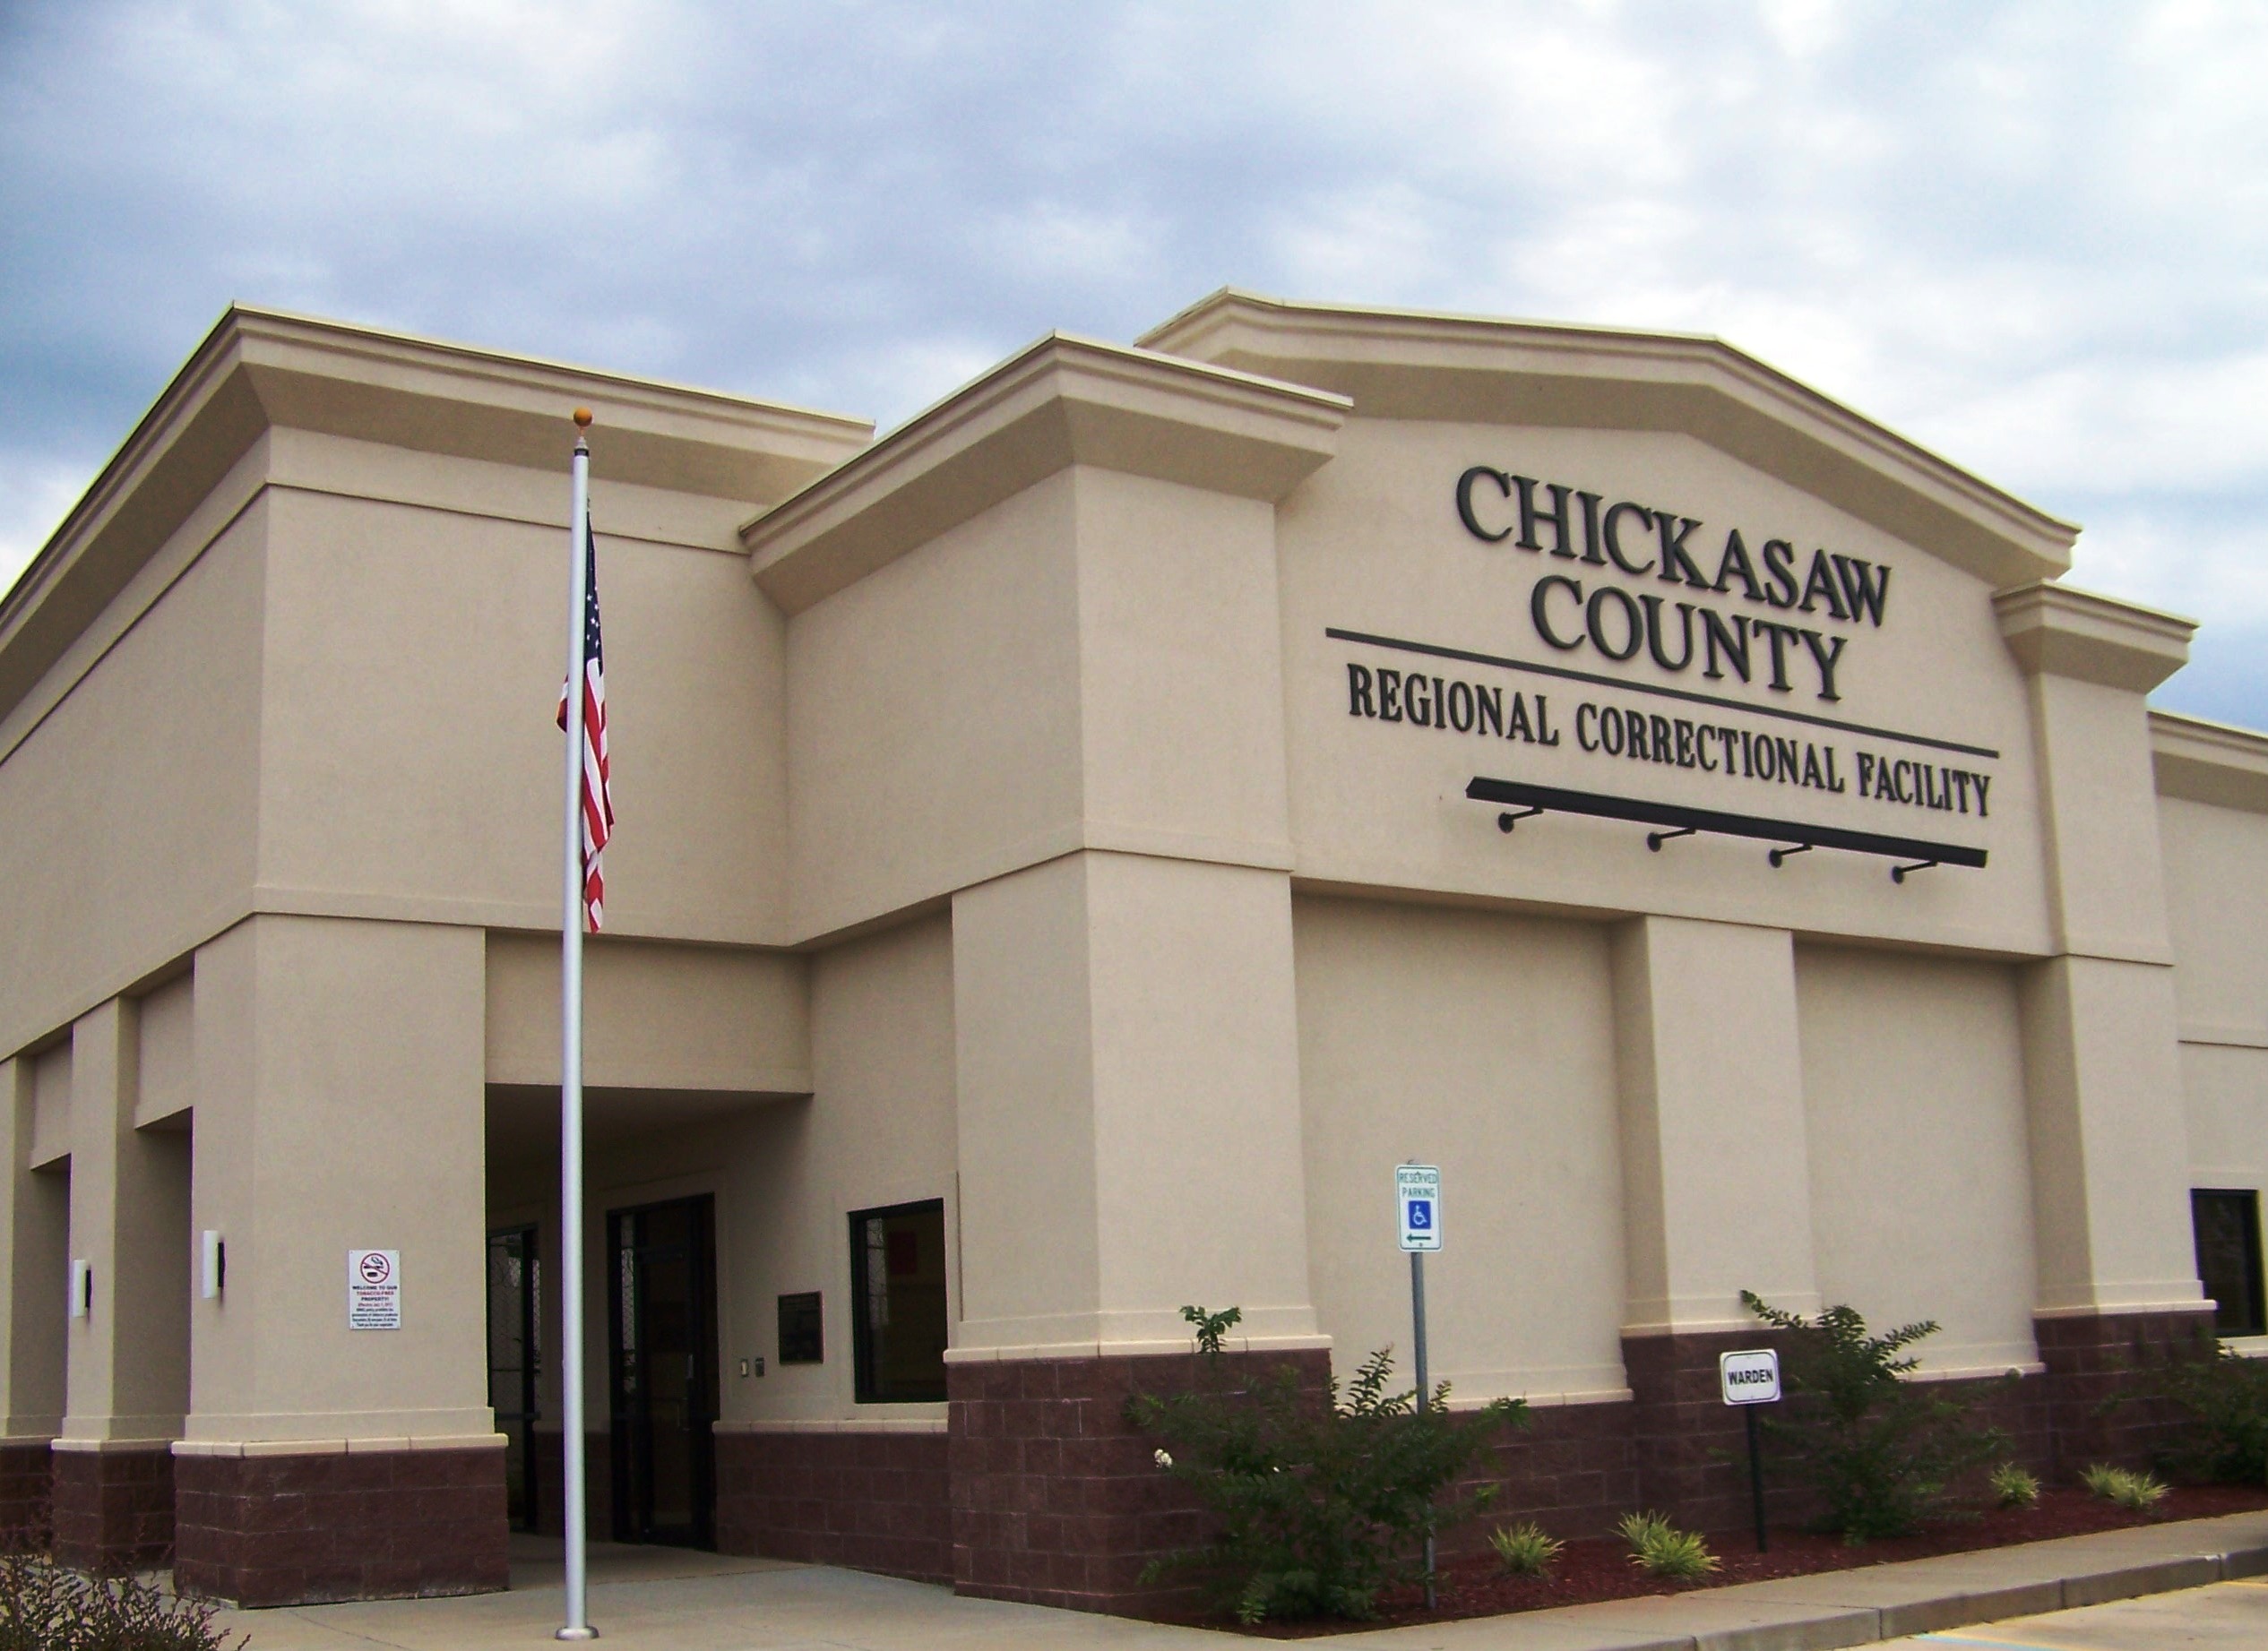 Chickasaw County Regional Correctional Facility